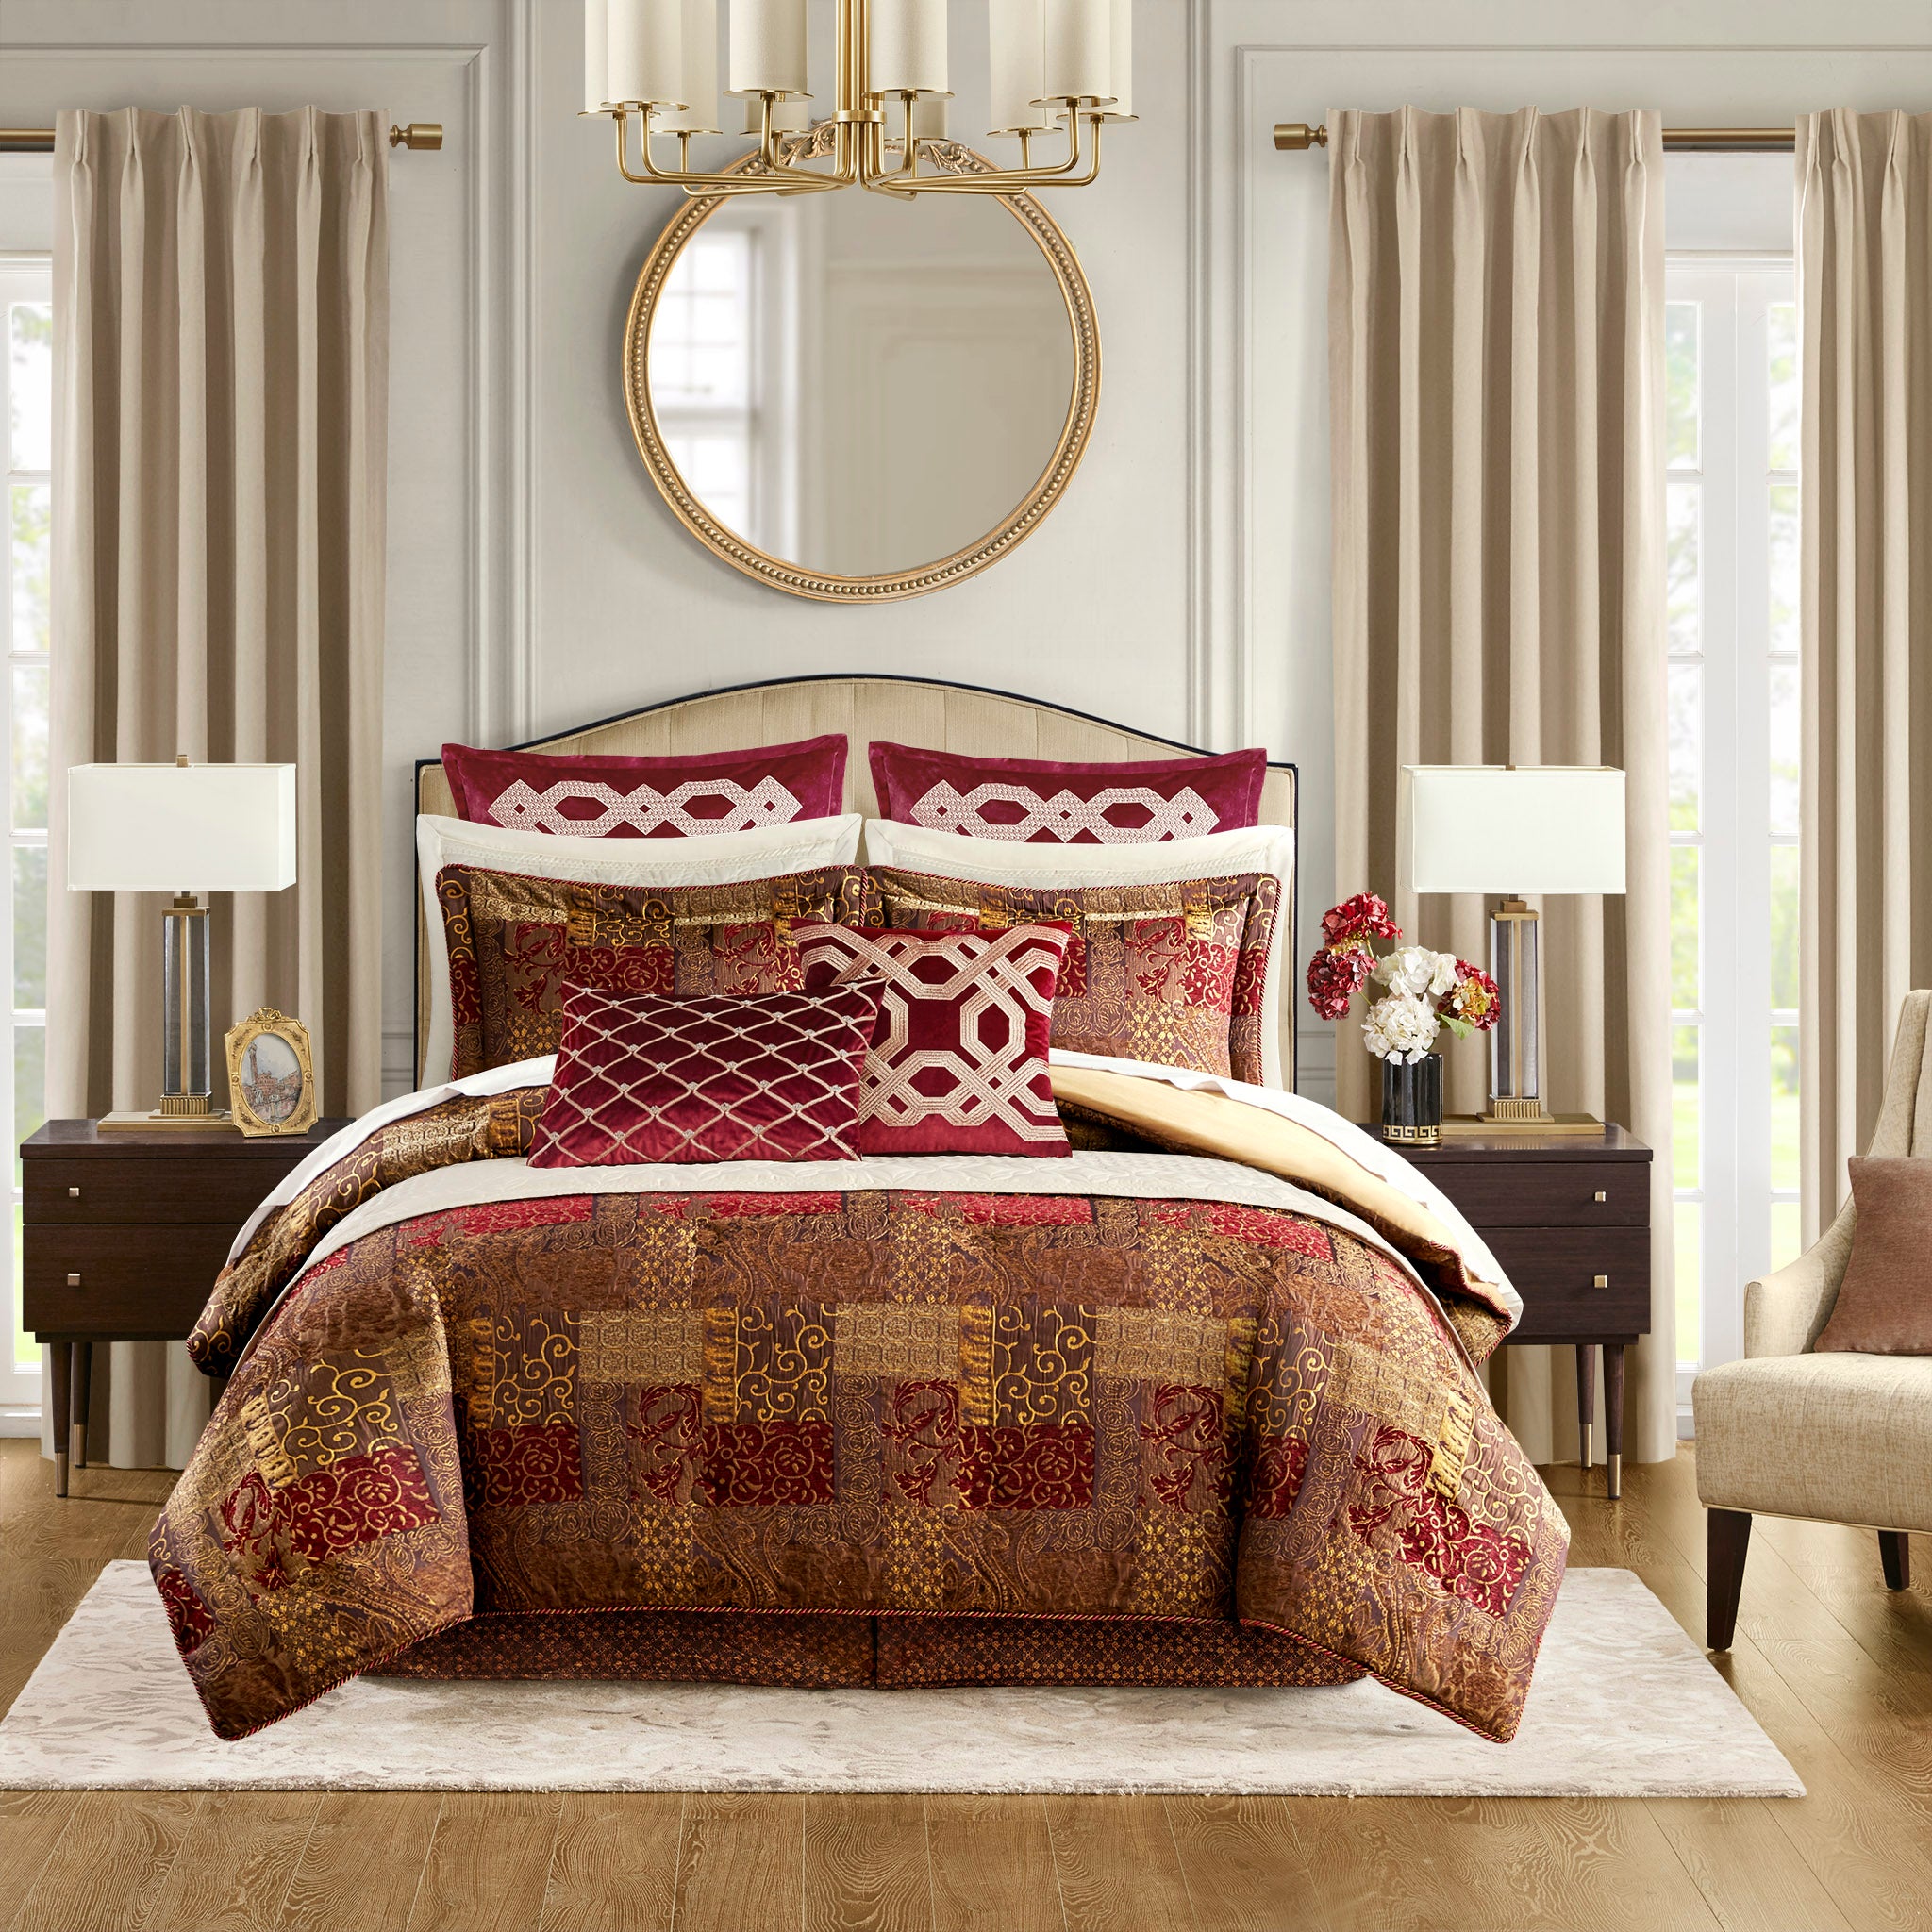 Croscill Classics - Galleria Comforter Online 4 Croscill Set Store Bedding - – Adult/Fashion Red Piece